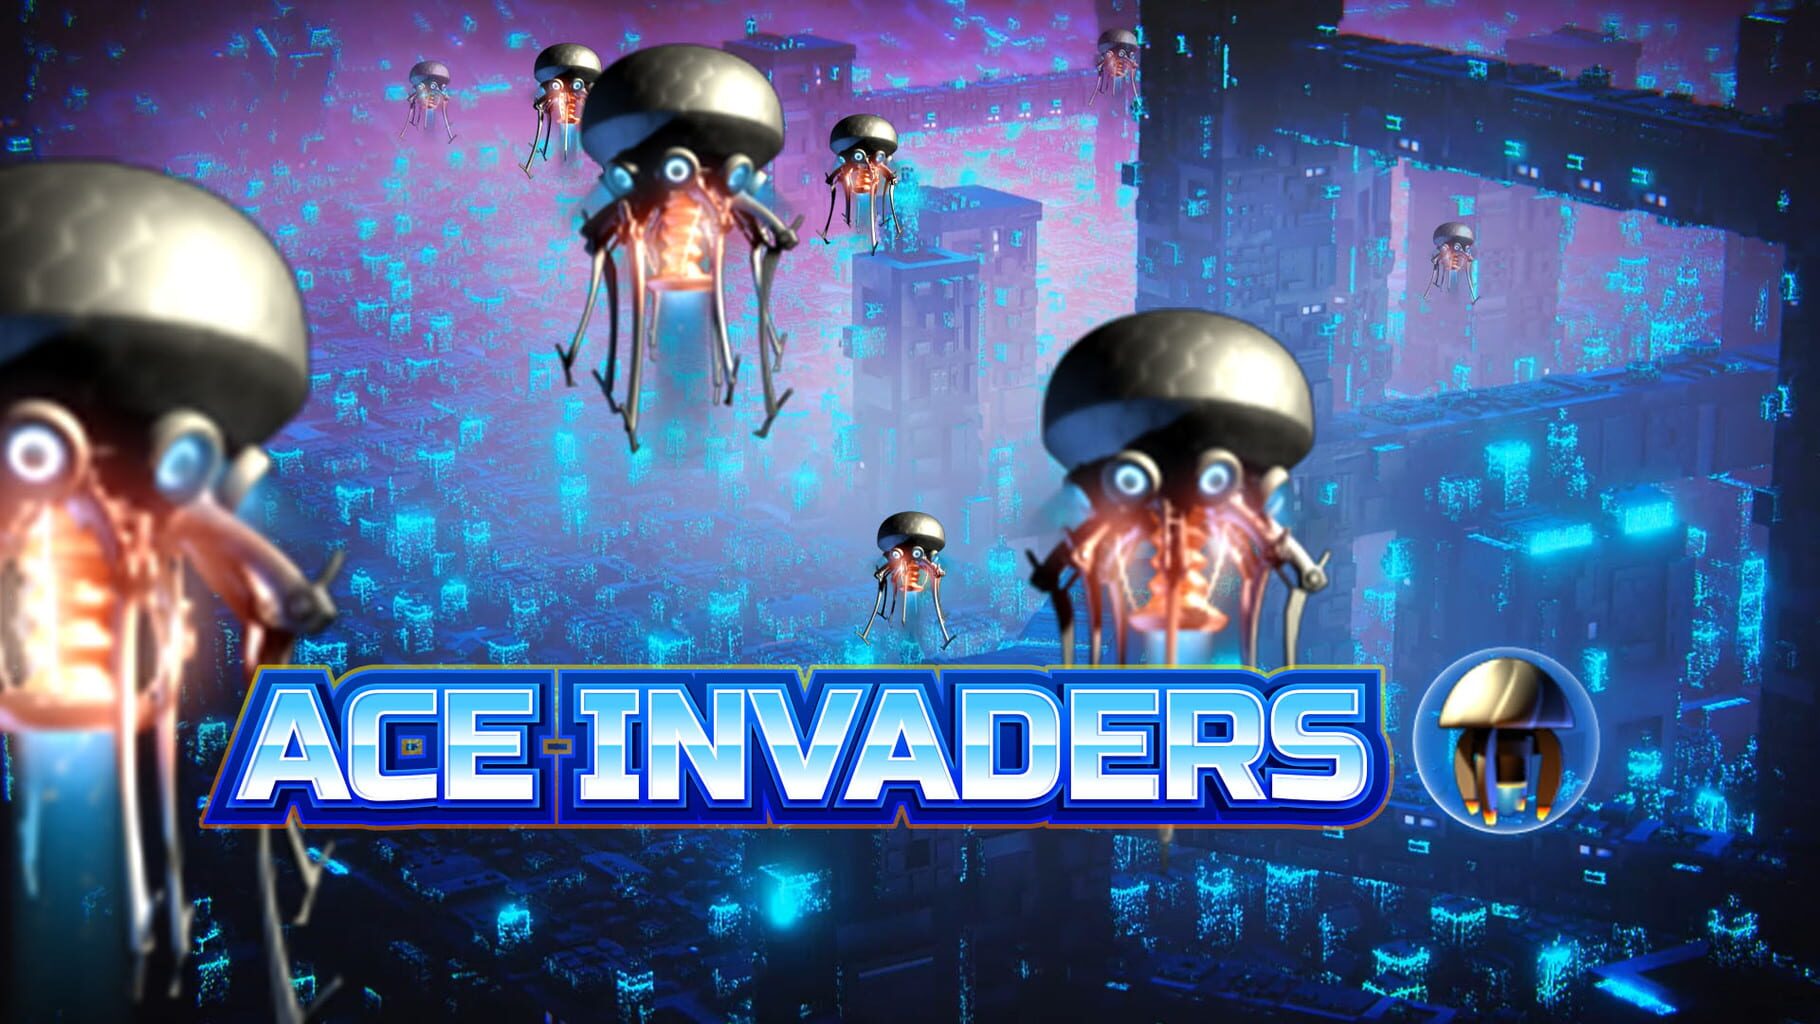 Ace Invaders artwork